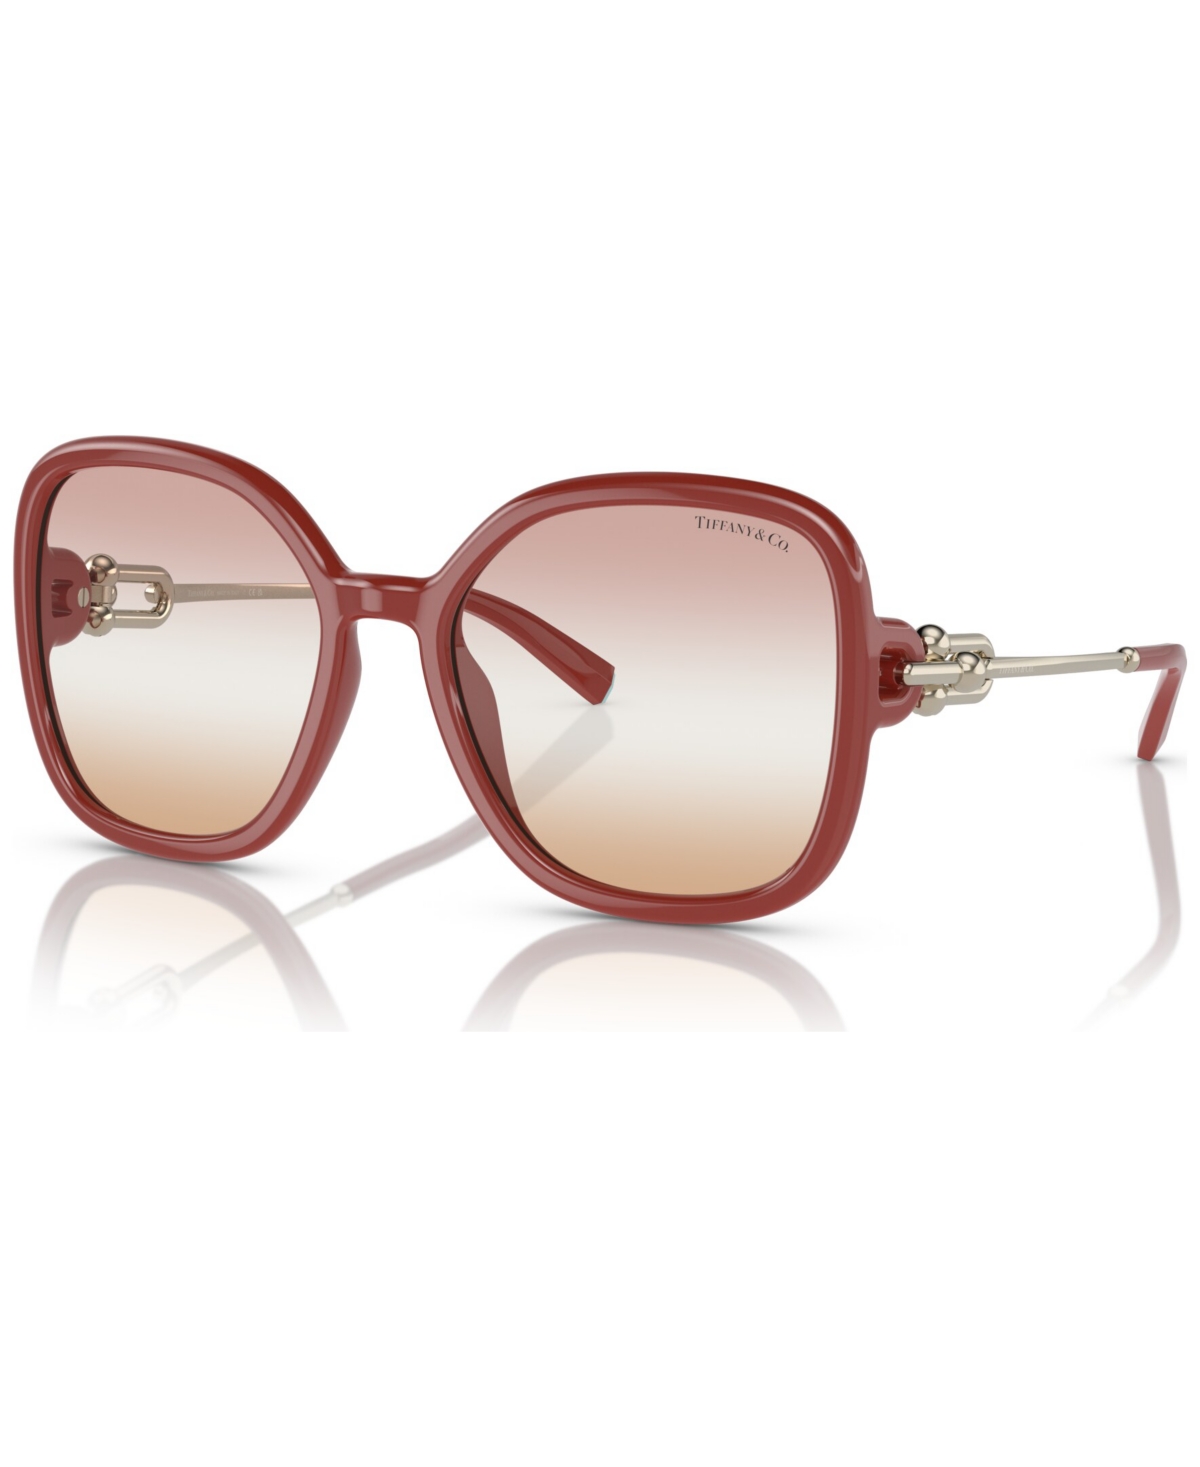 Tiffany & Co Women's Sunglasses, Tf4202u In Gradient Pink Gradient Brown